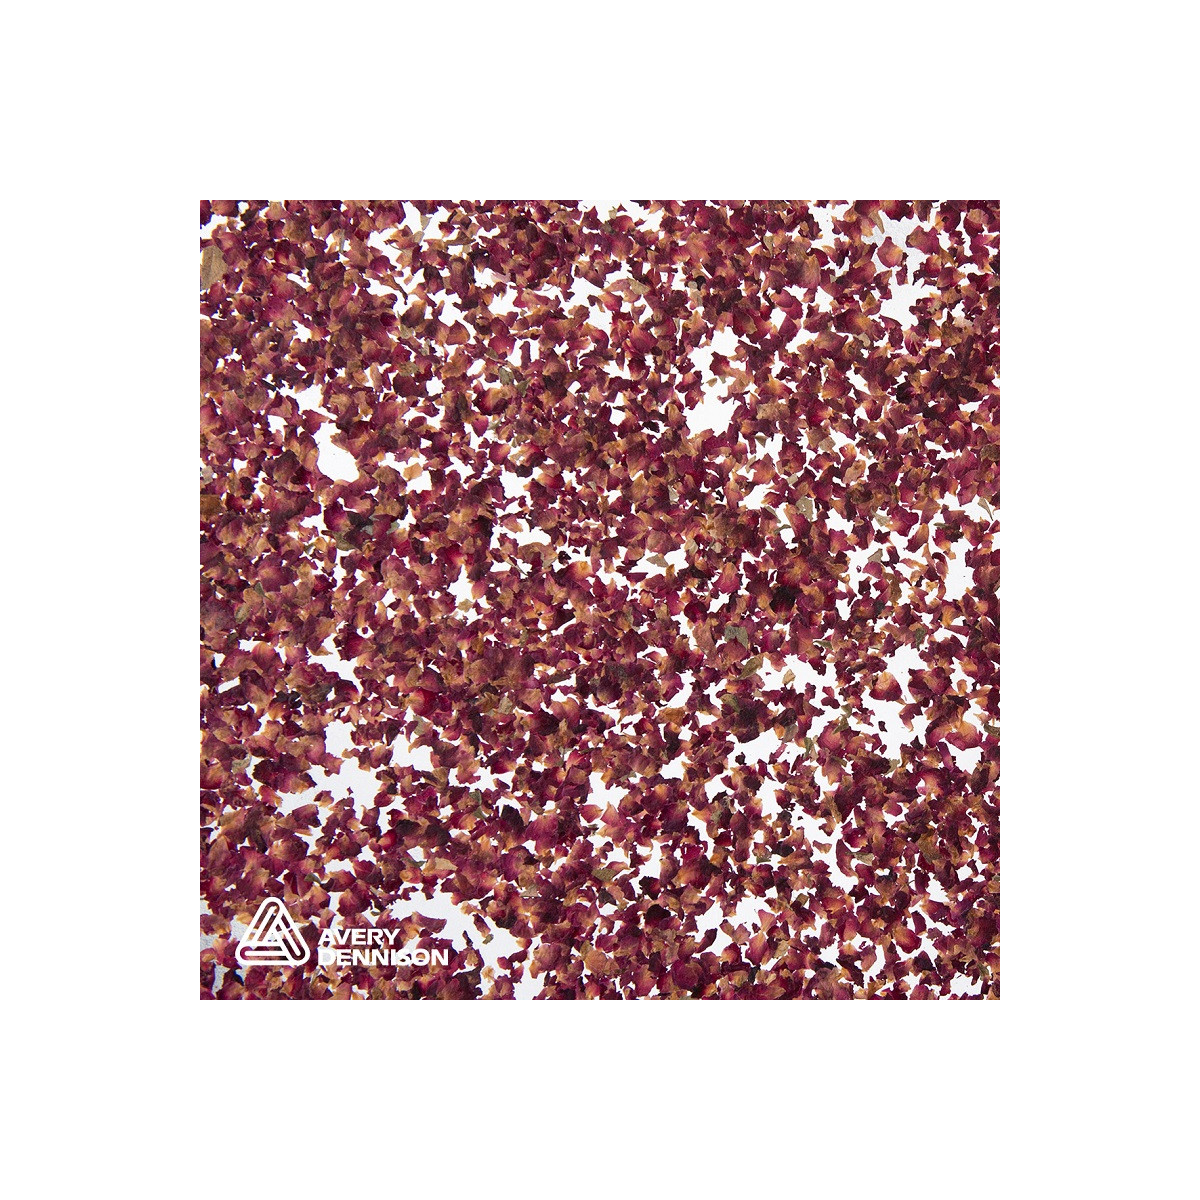 Superfici naturali Organoid - Petali di rosa Organoid - traslucido Acte-Deco